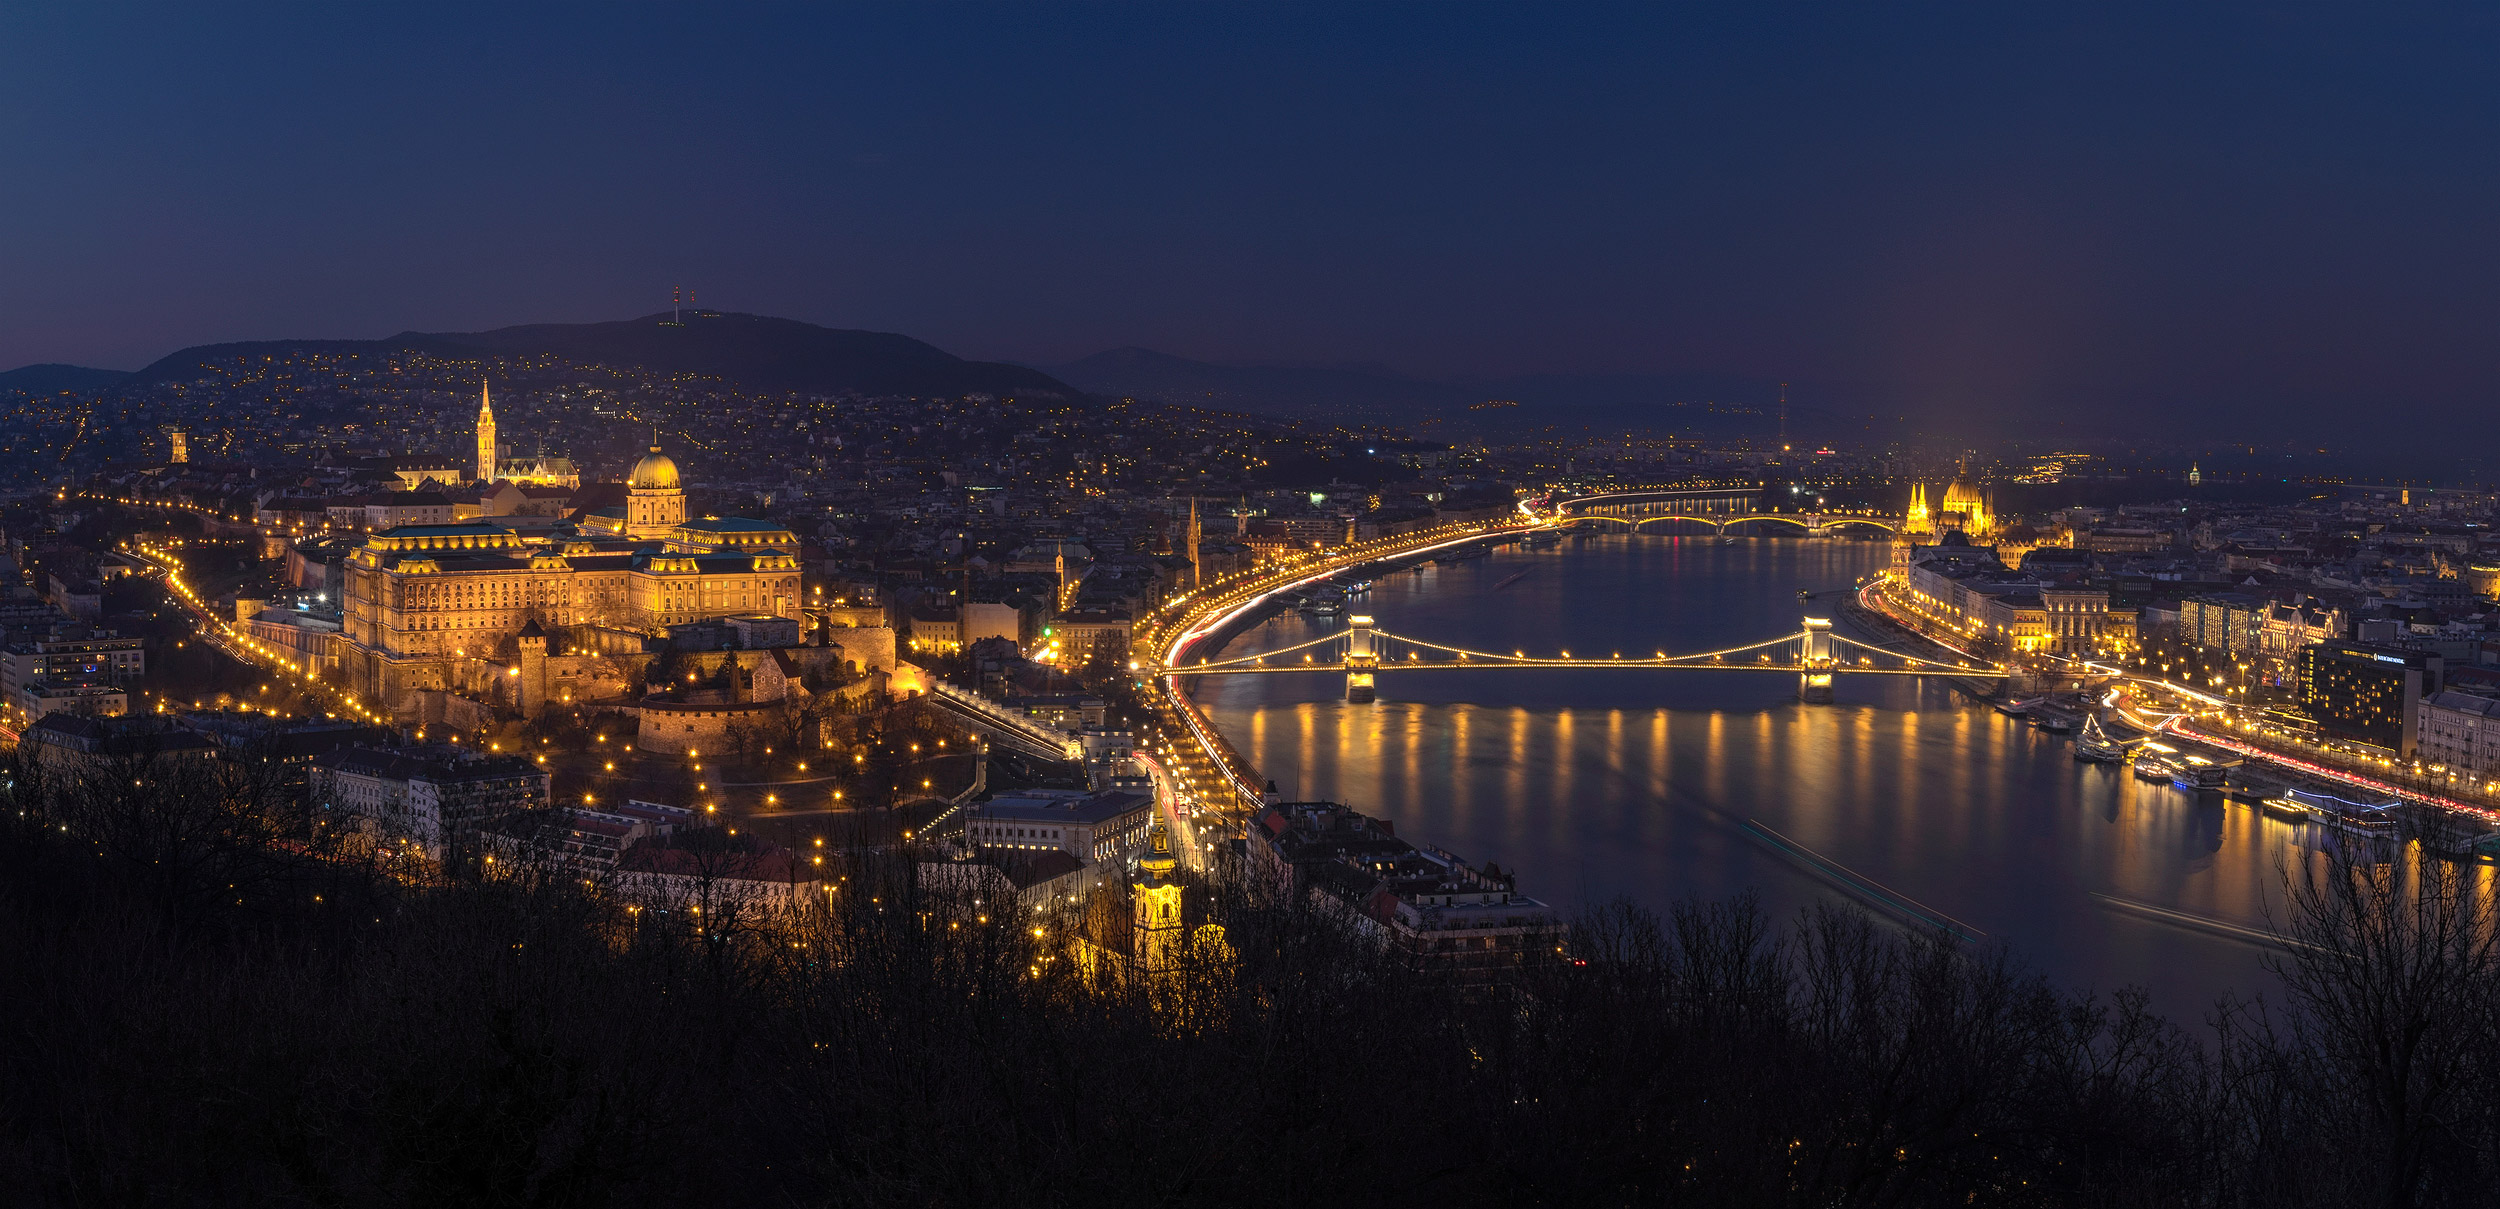 Beautiful night view of Budapest from Gellert hill, Hungary